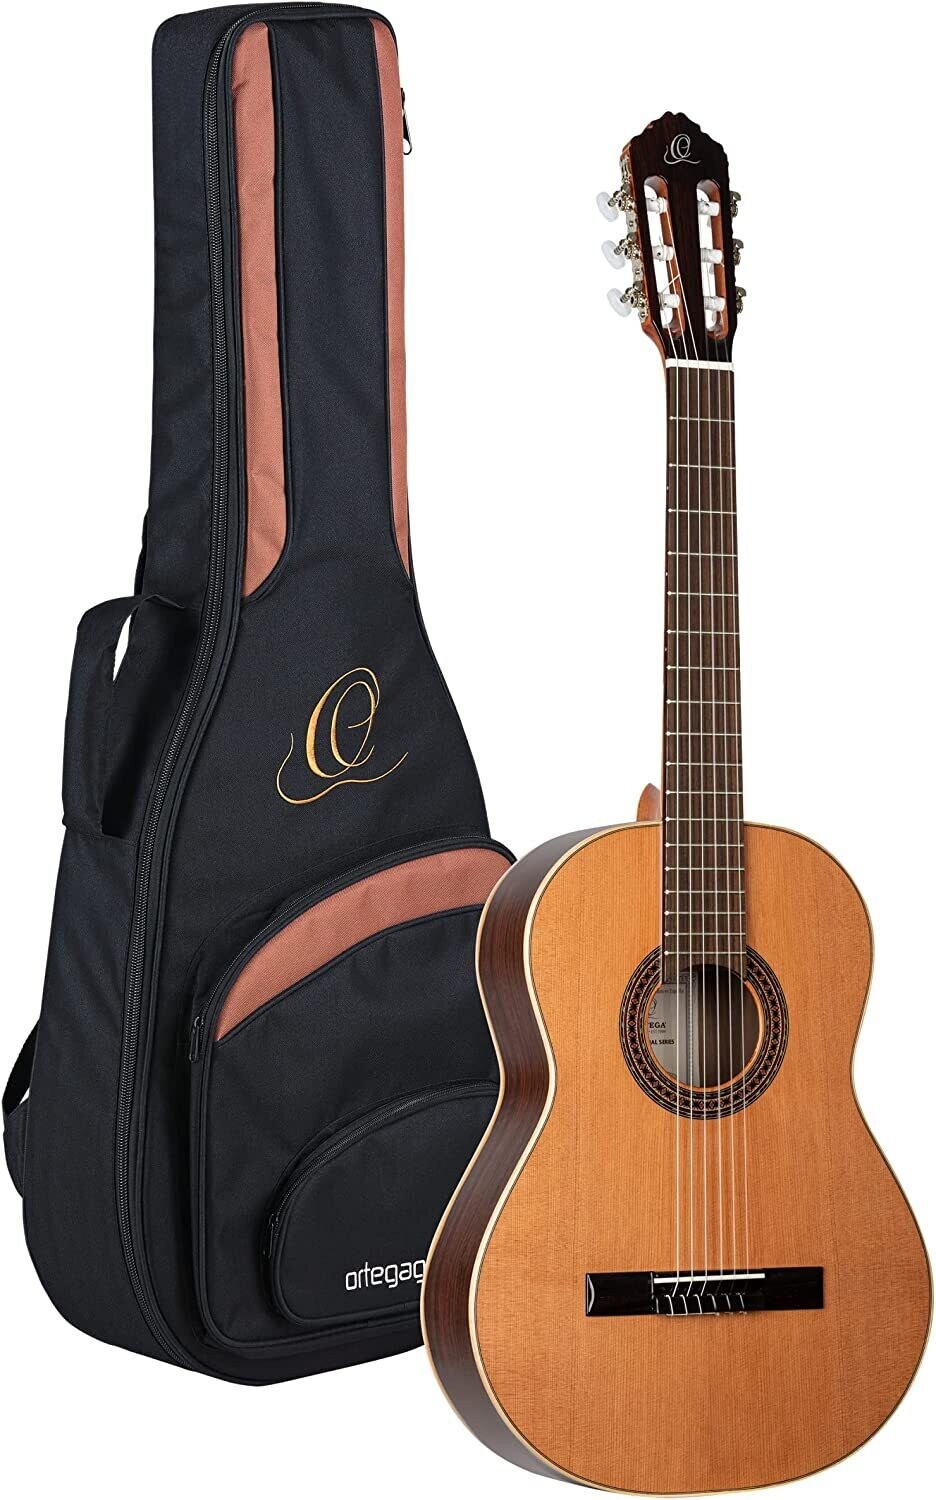 Cordoba Deluxe Guitar Bag - 1/4 Size